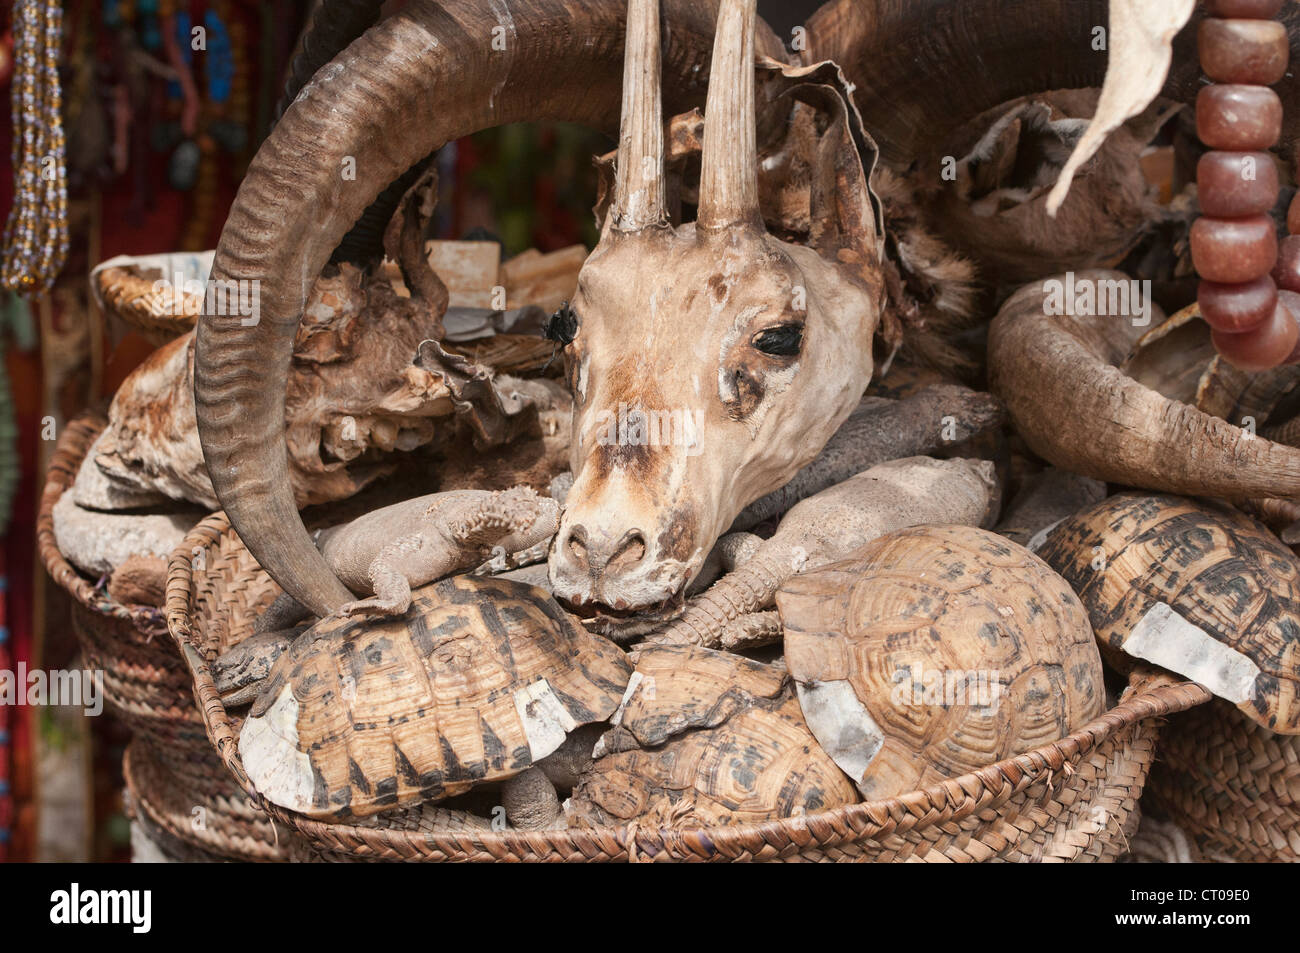 animal skulls in the spice souks of Marrakech, Morocco Stock Photo